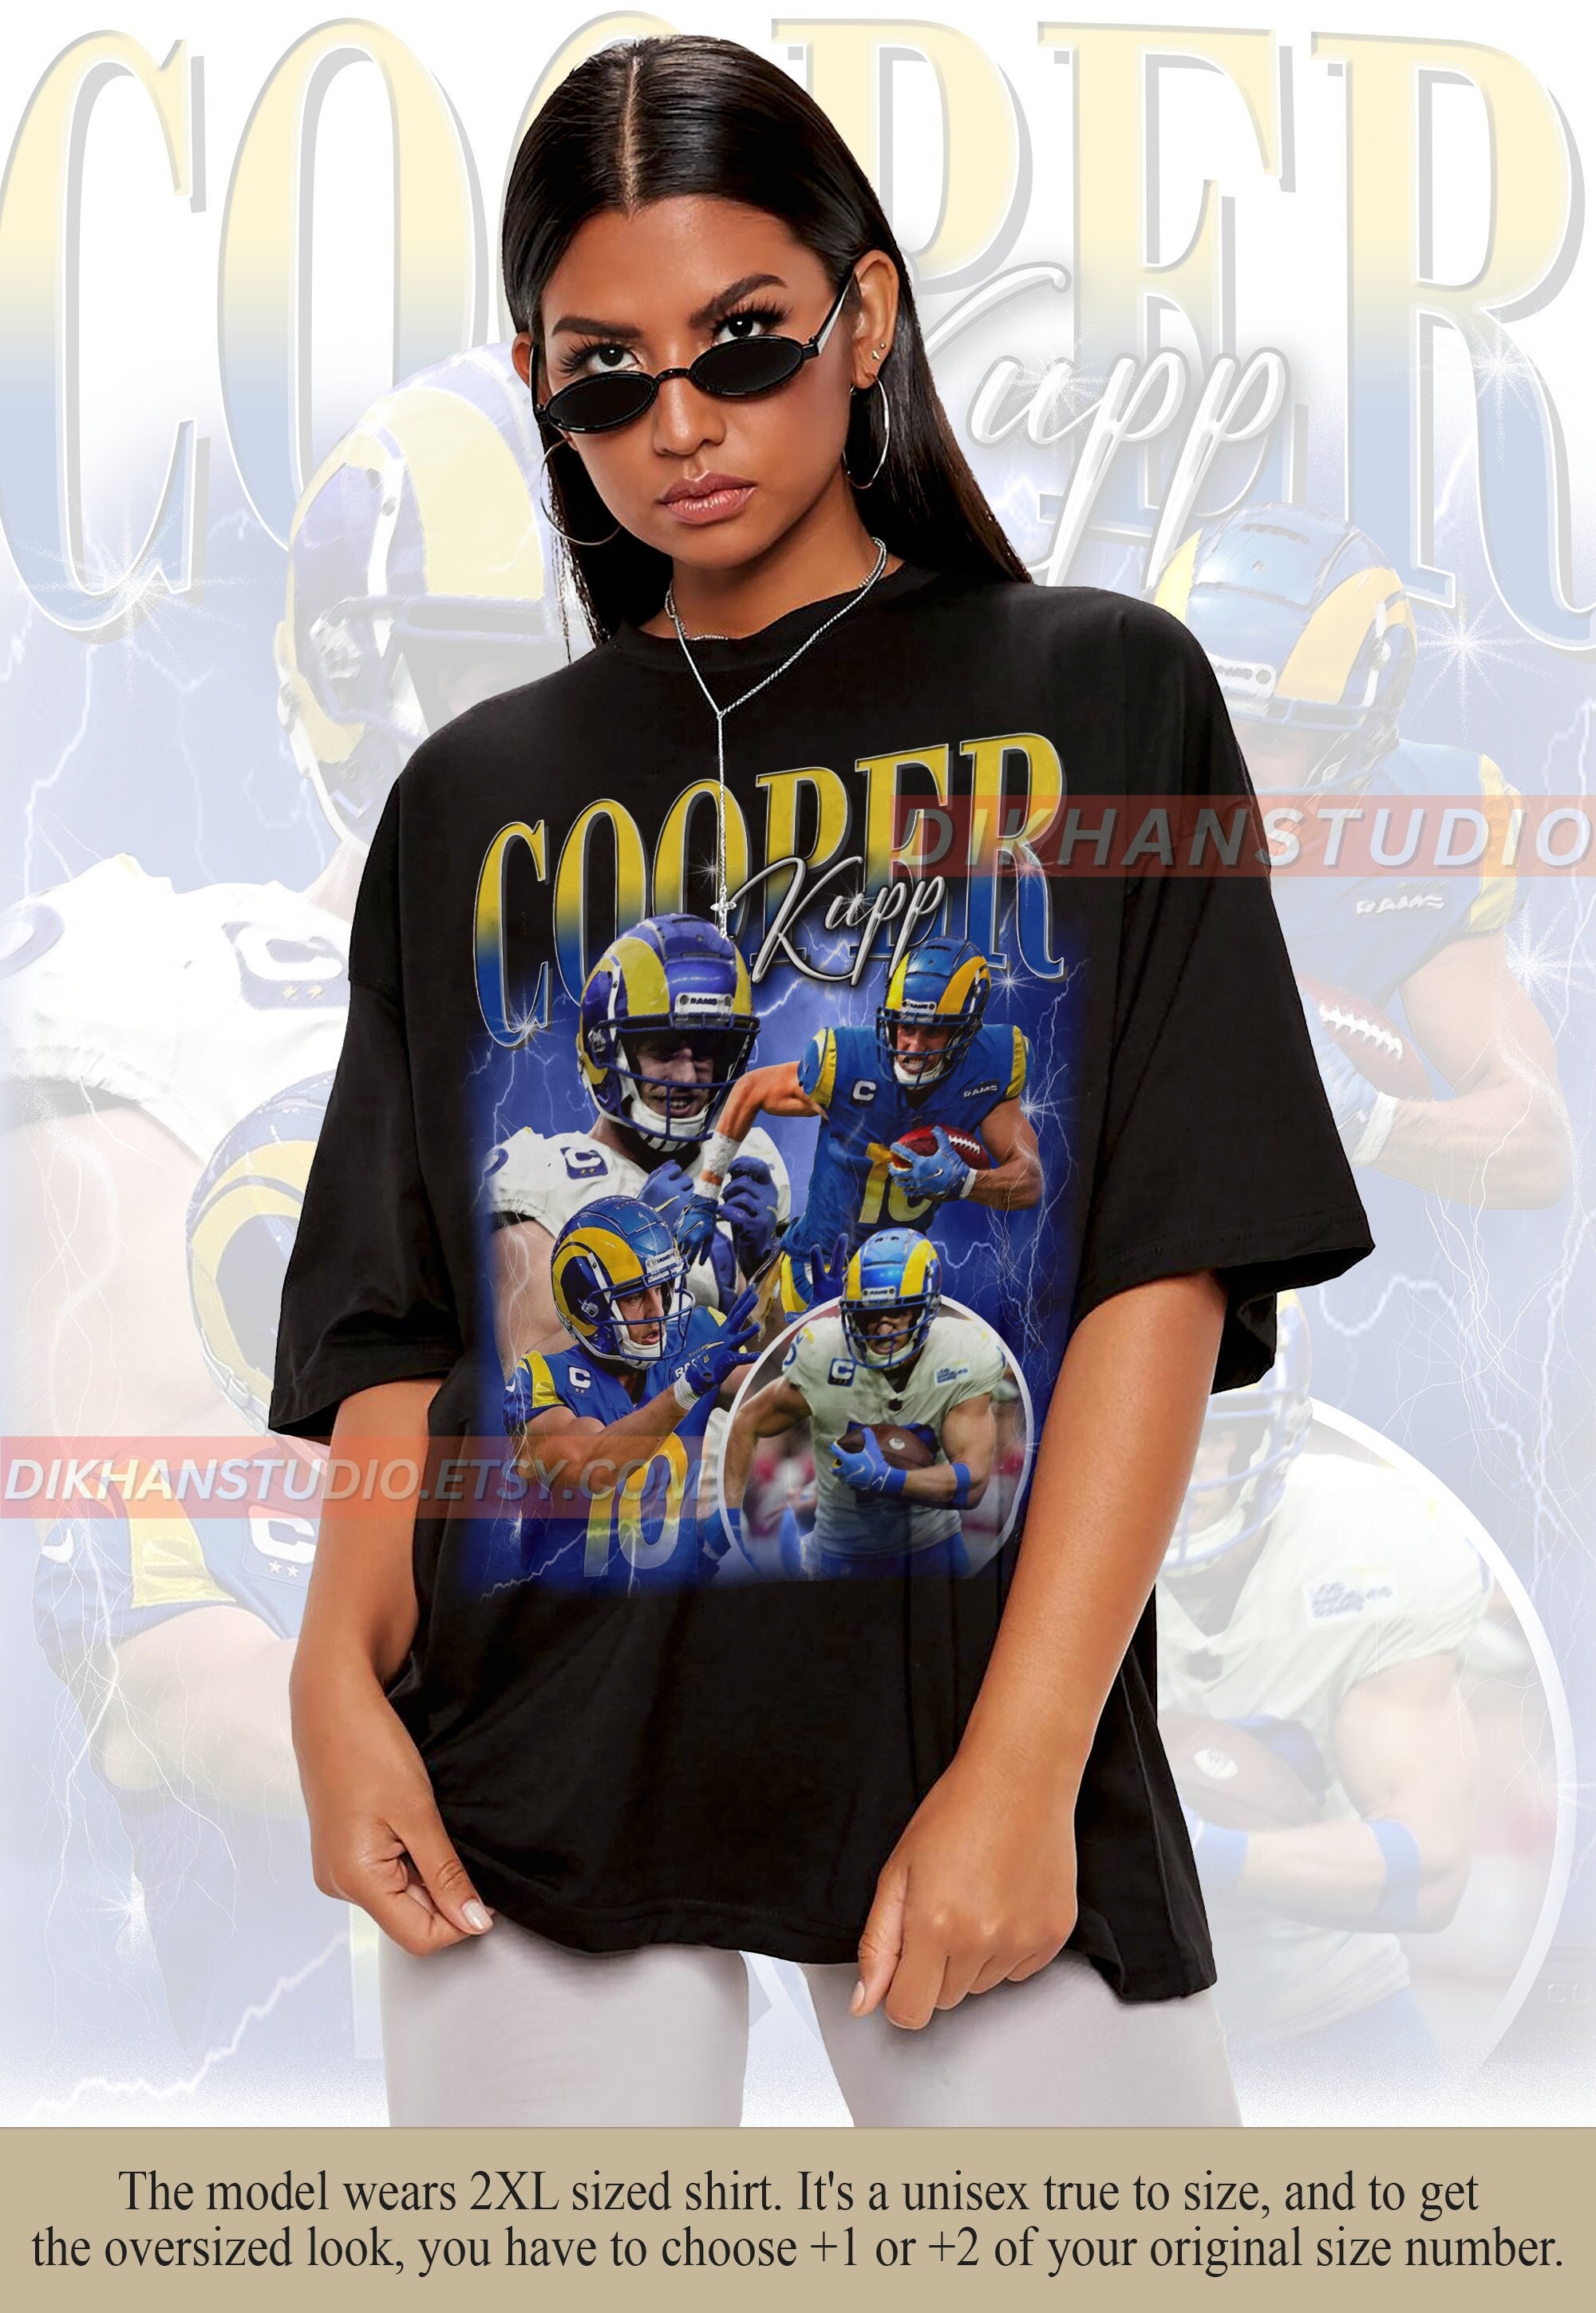 Cooper Kupp Dreamathon LA Rams Shirt - Trends Bedding